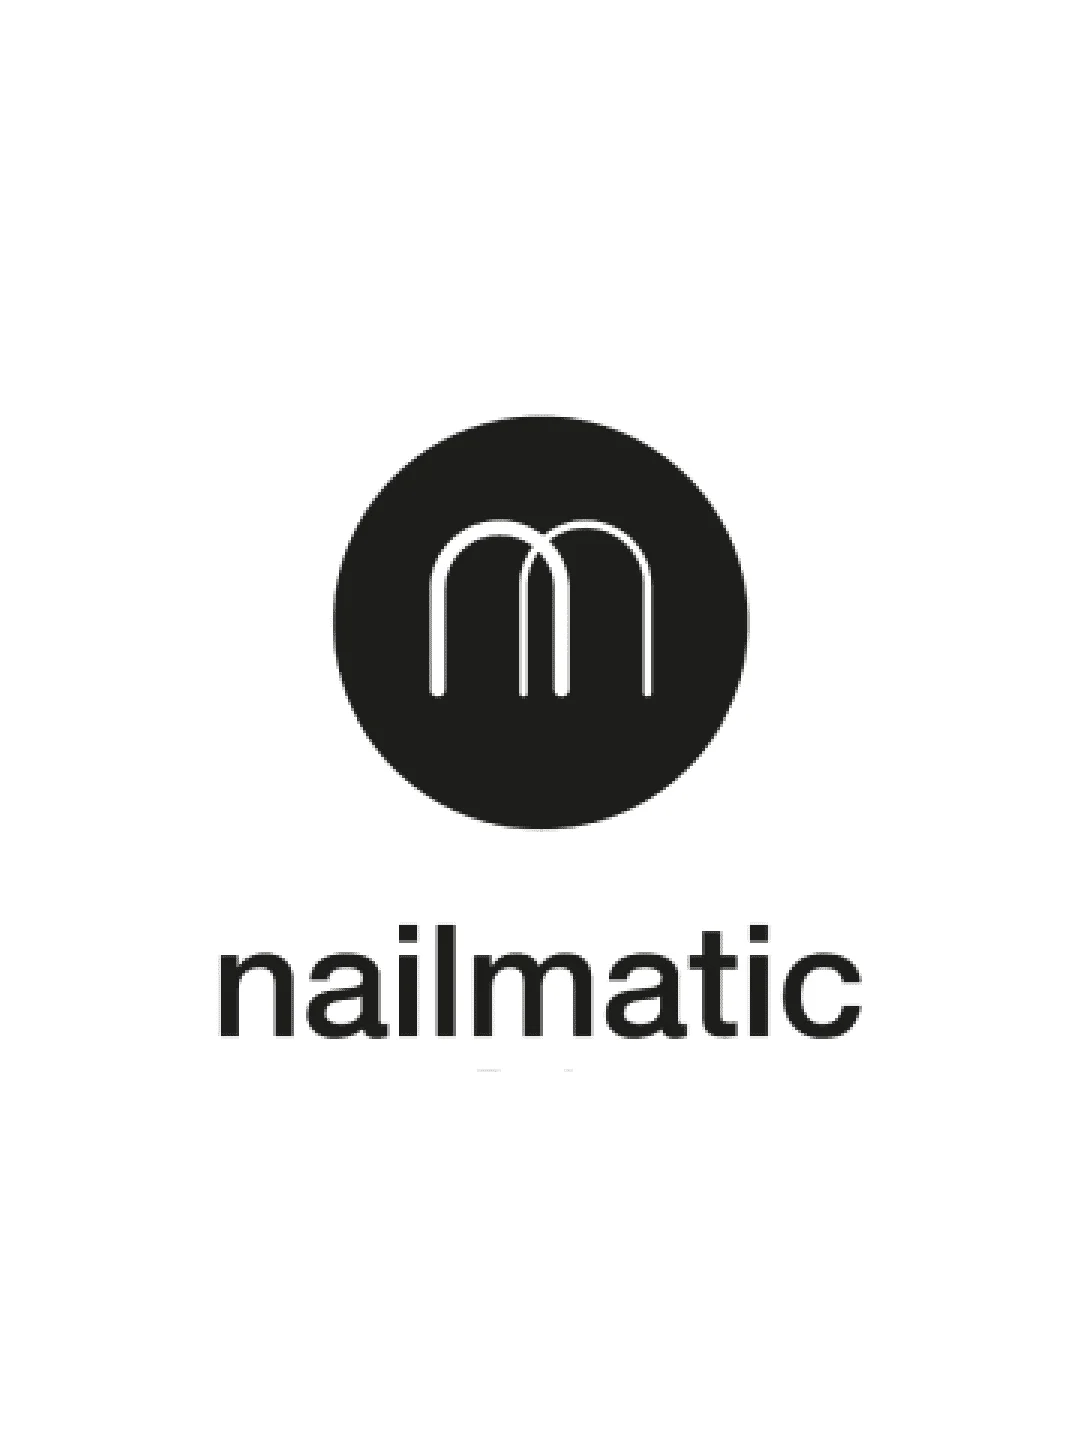 manufacturer_logo